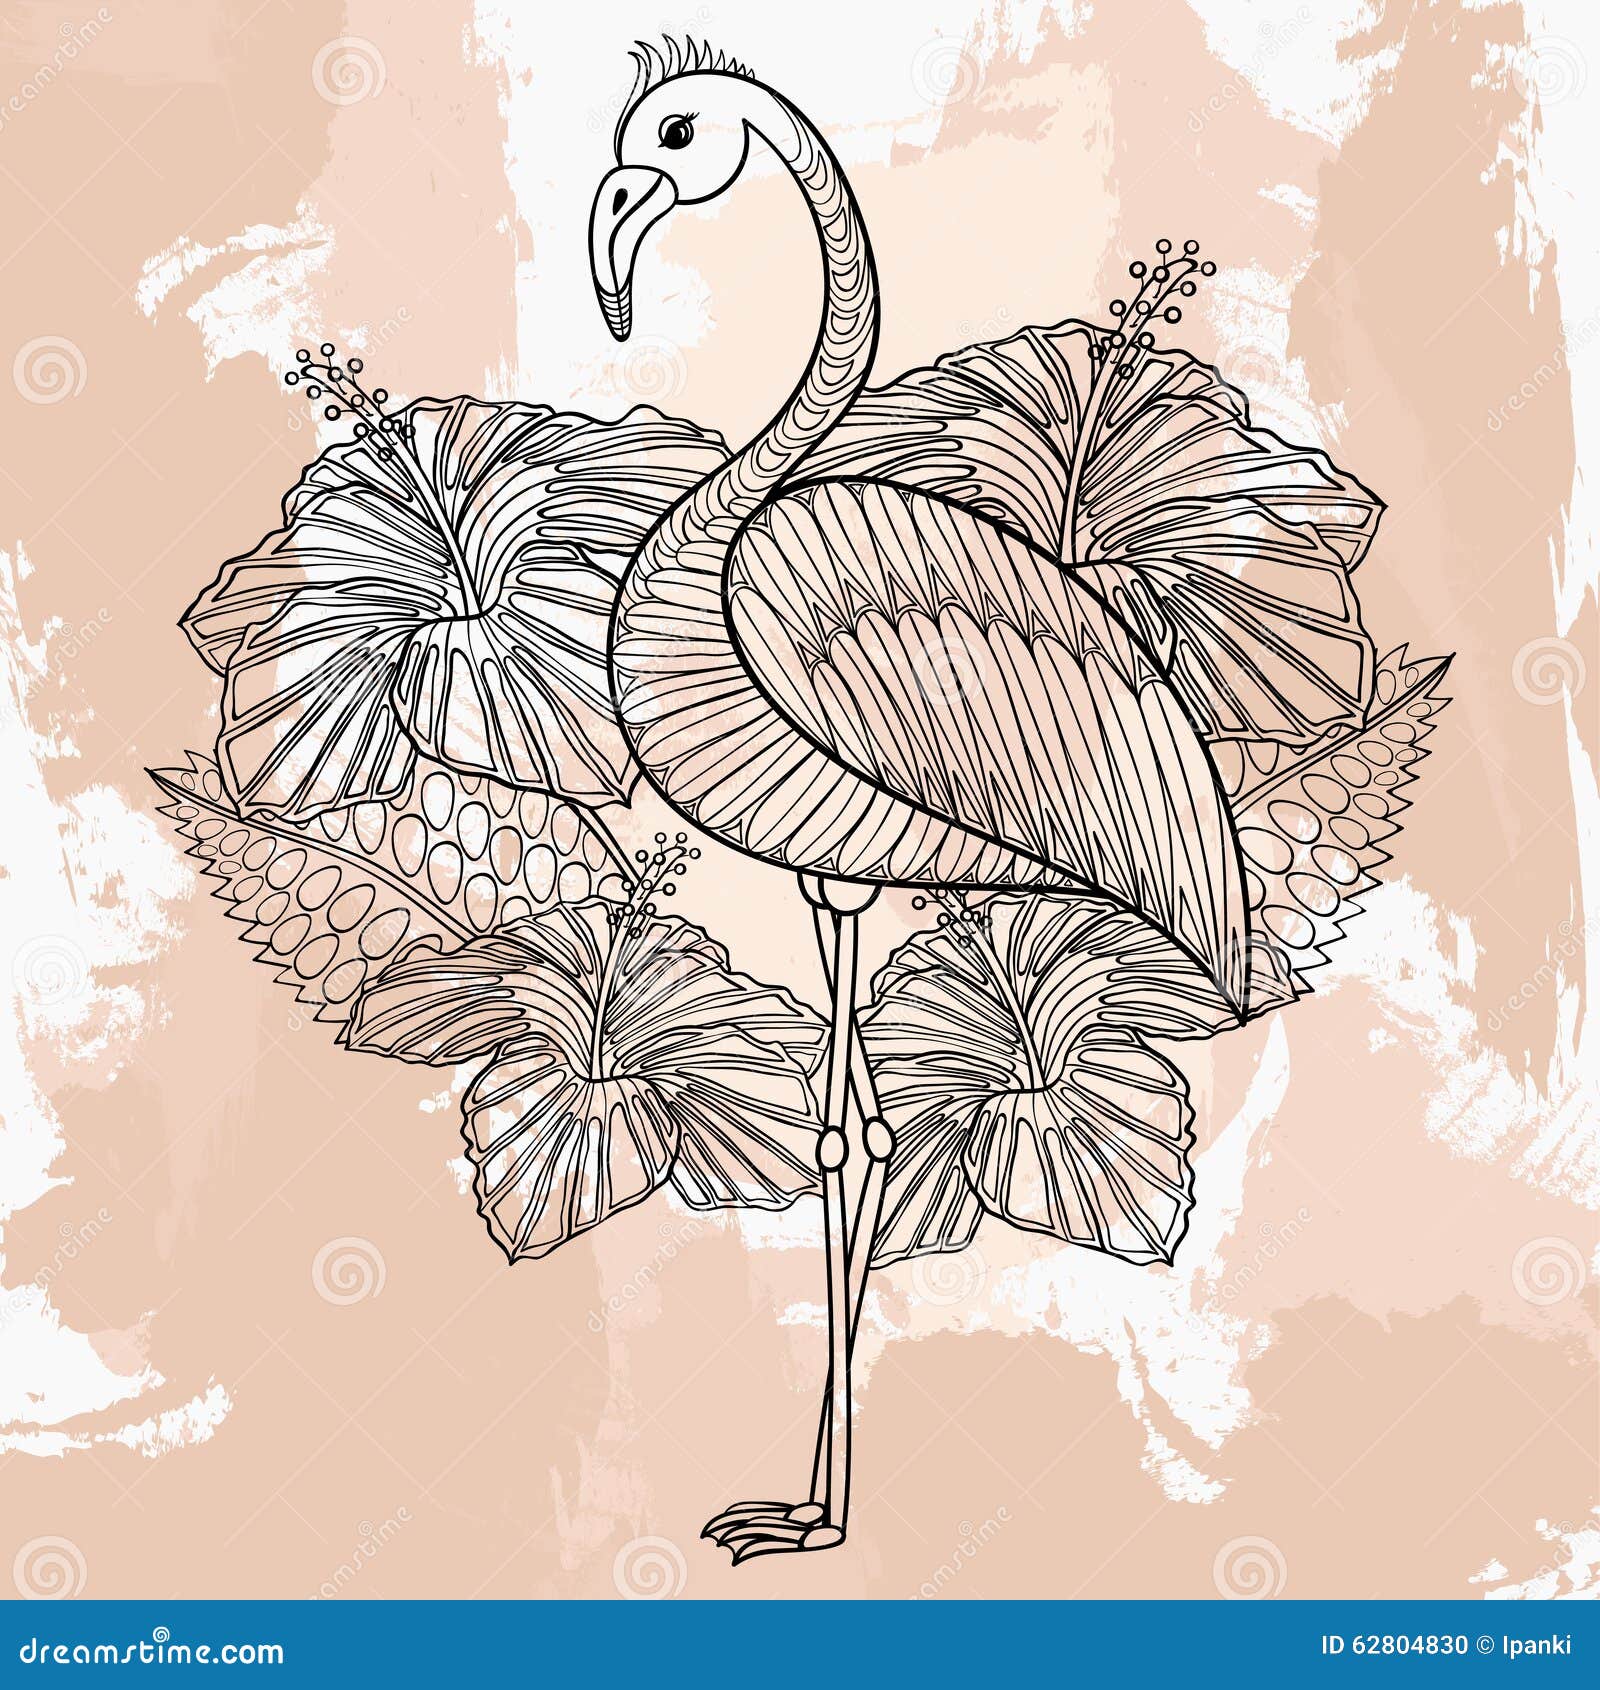 Flamingo tattoo design rev by PureDiamond360 on DeviantArt